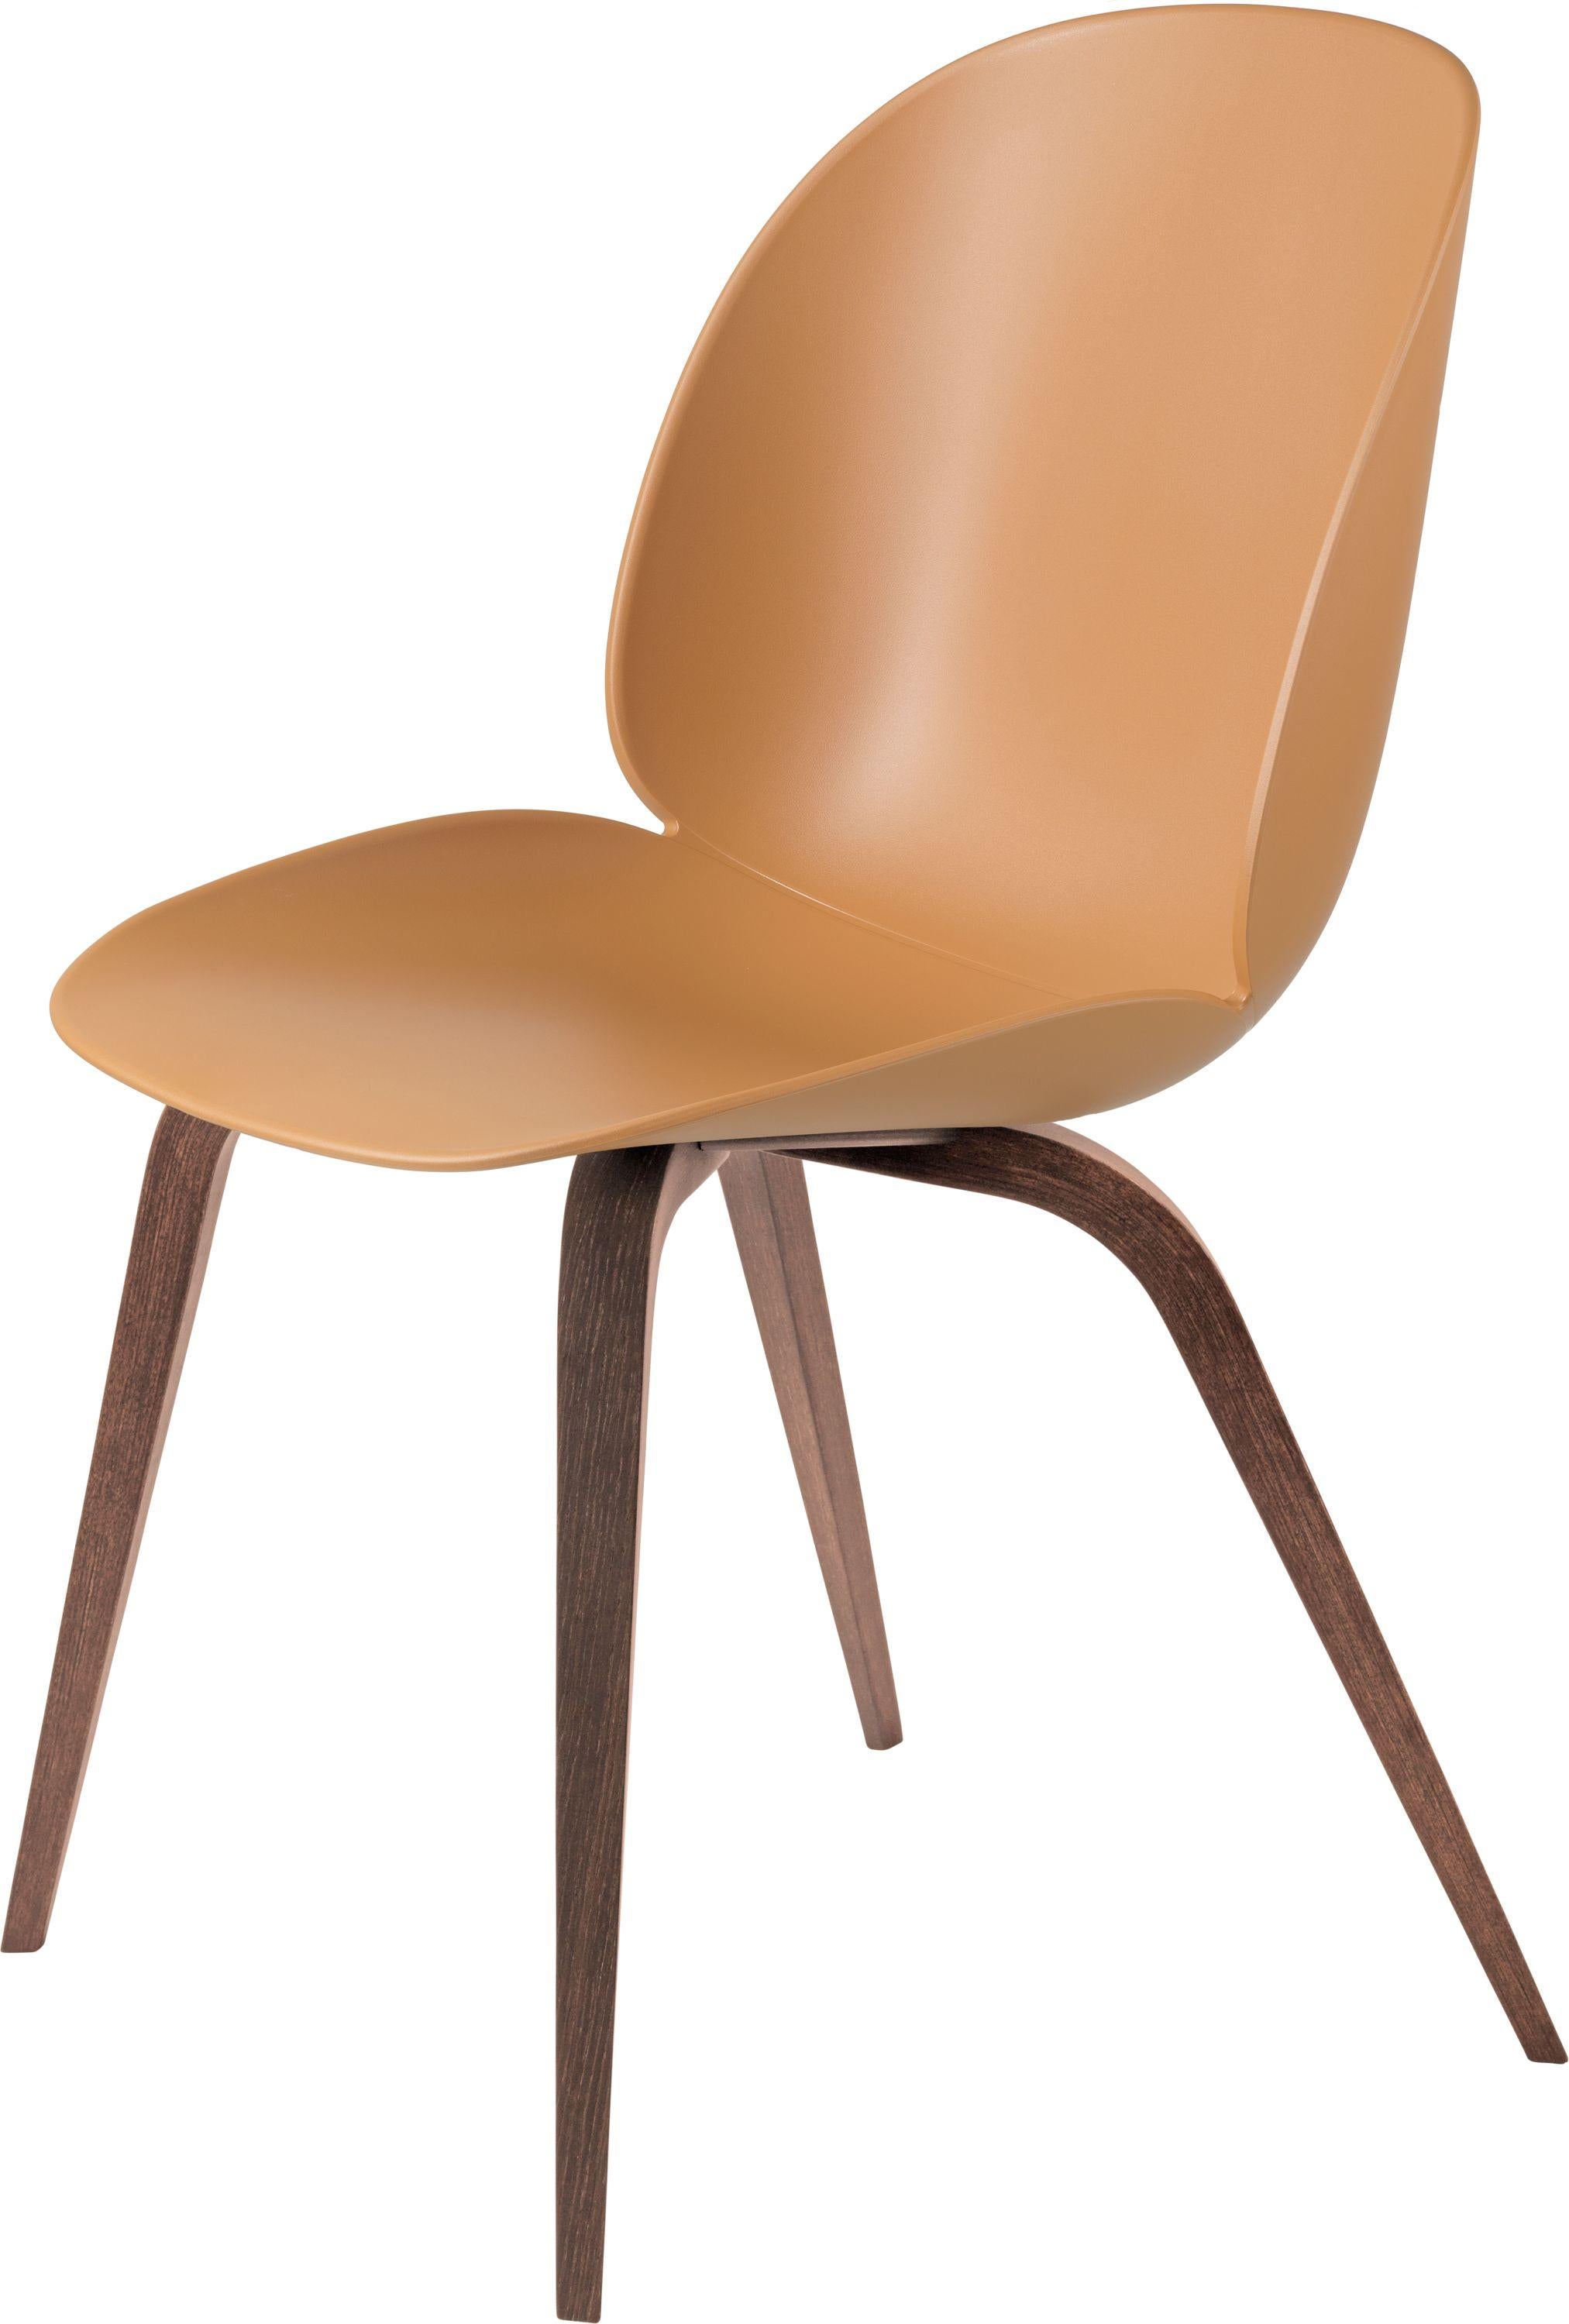 Mid-Century Modern GamFratesi 'Beetle' Dining Chair with Walnut Conic Base